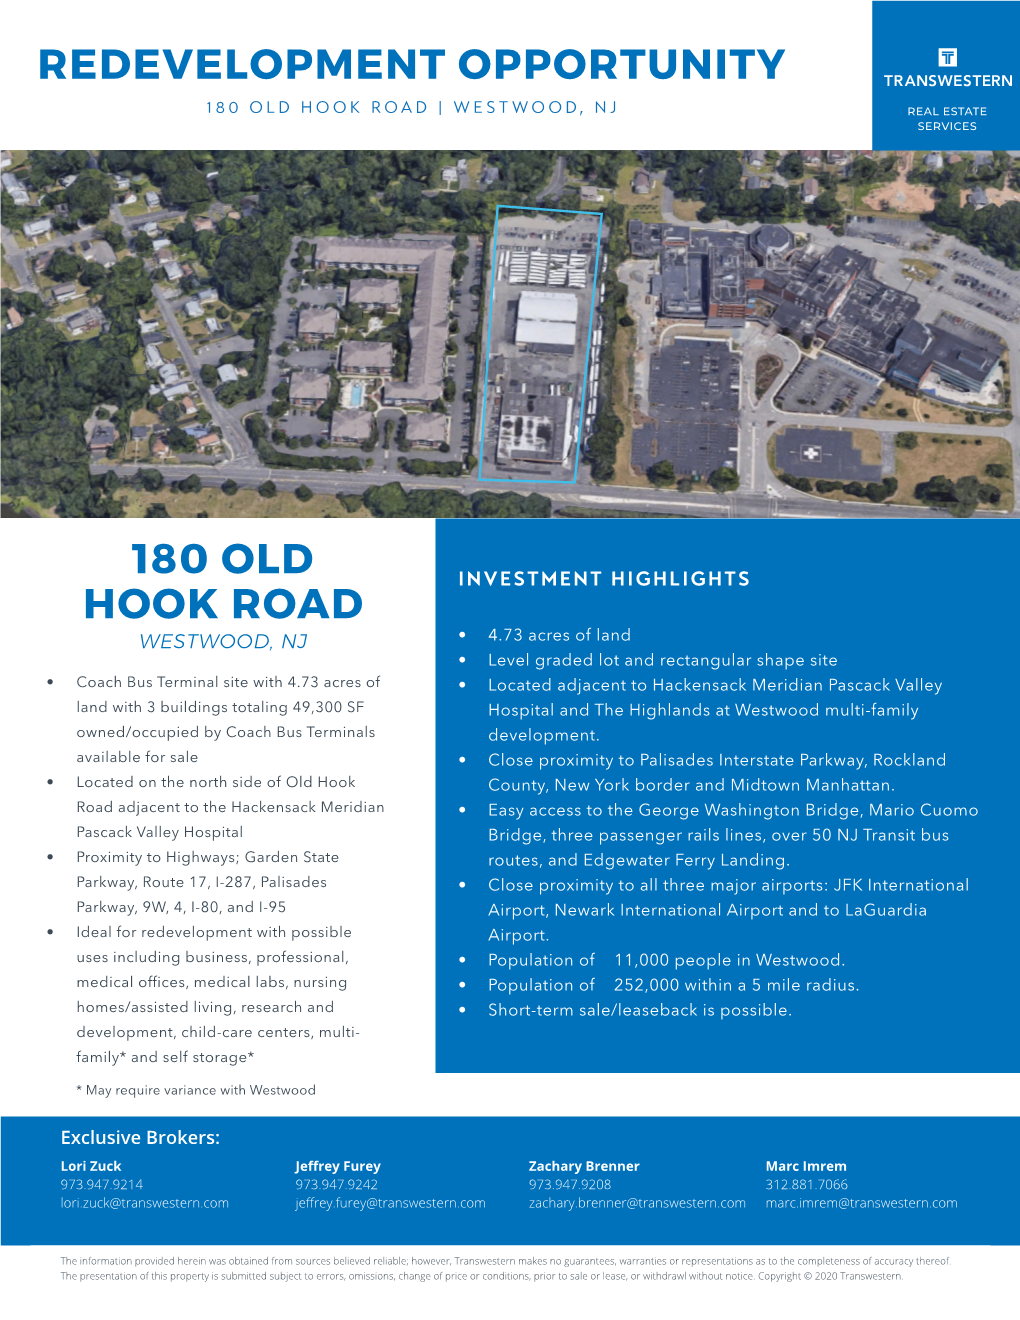 Redevelopment Opportunity 180 Old Hook Road | Westwood, Nj